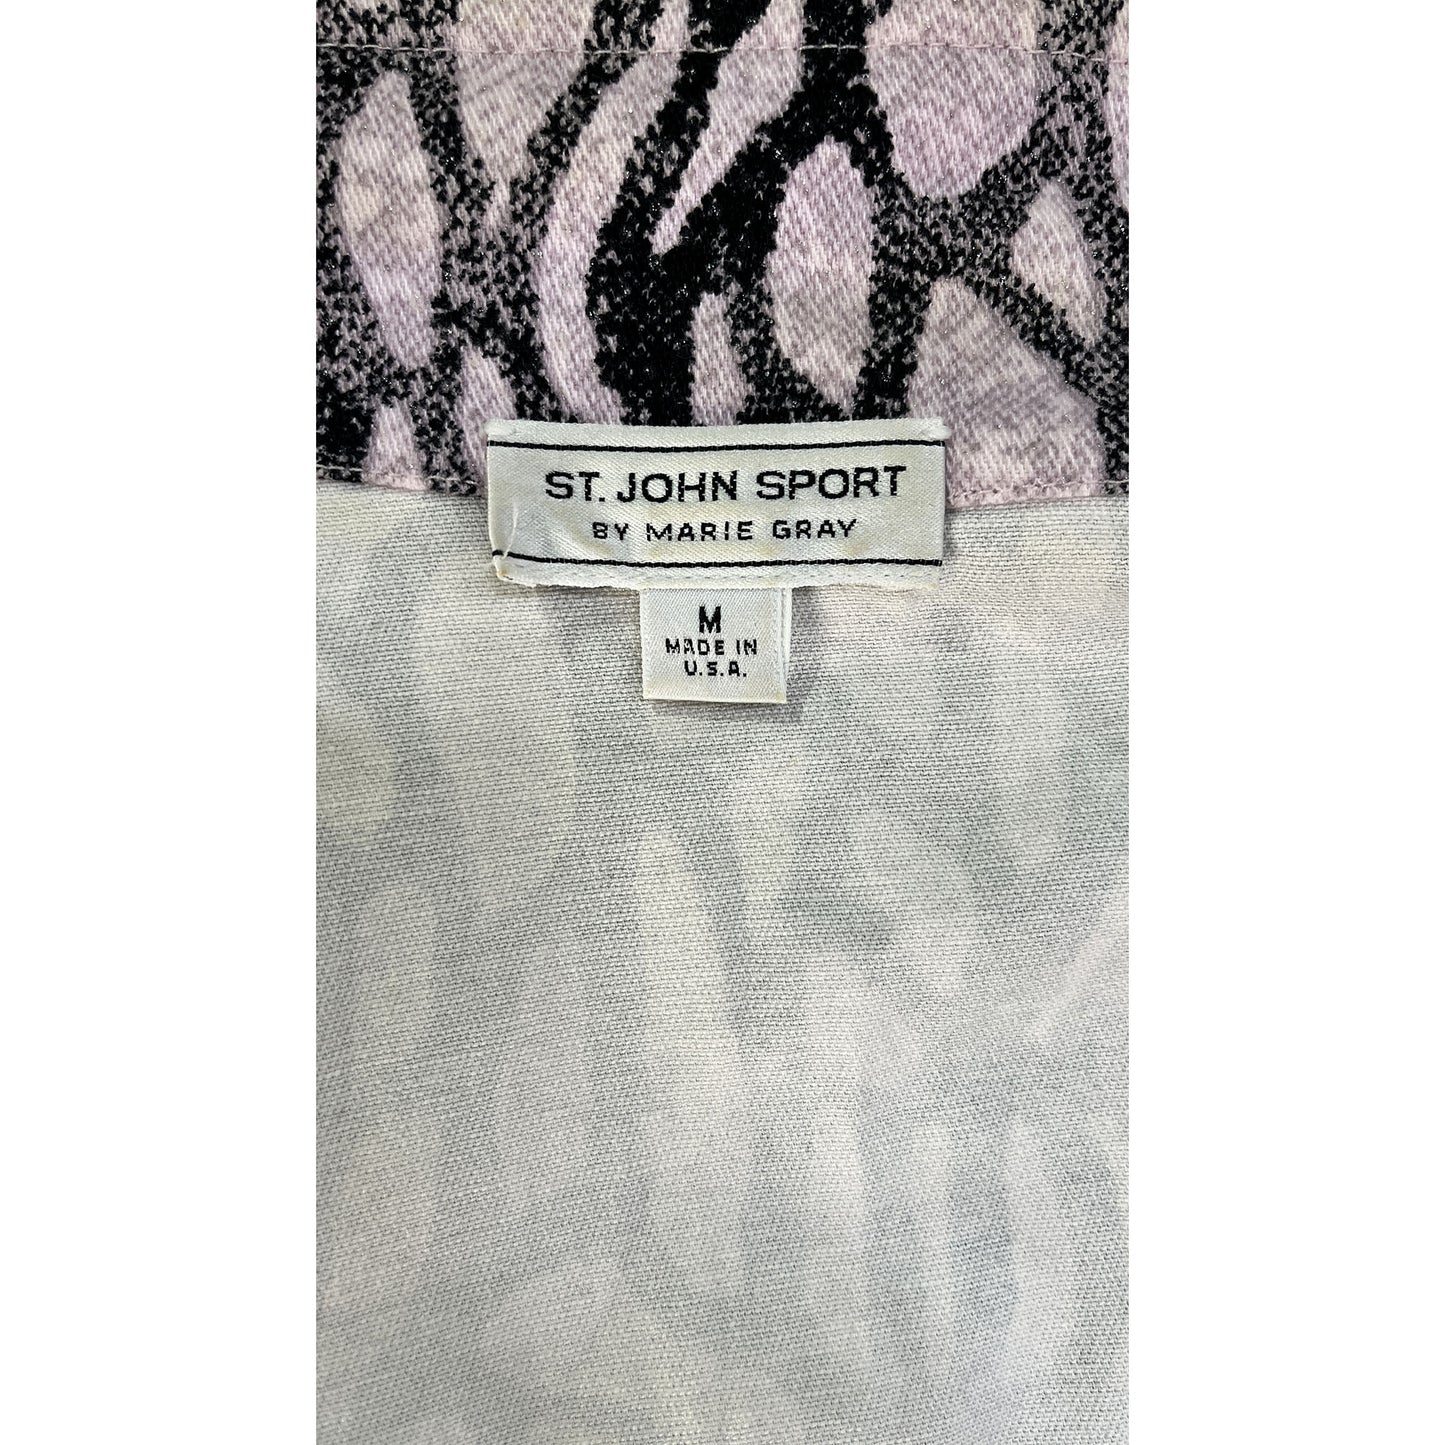 St. John Sport Jacket Collared Zip-Up Abstract Pattern Sparkle Pink, Black Size M SKU 000258-3